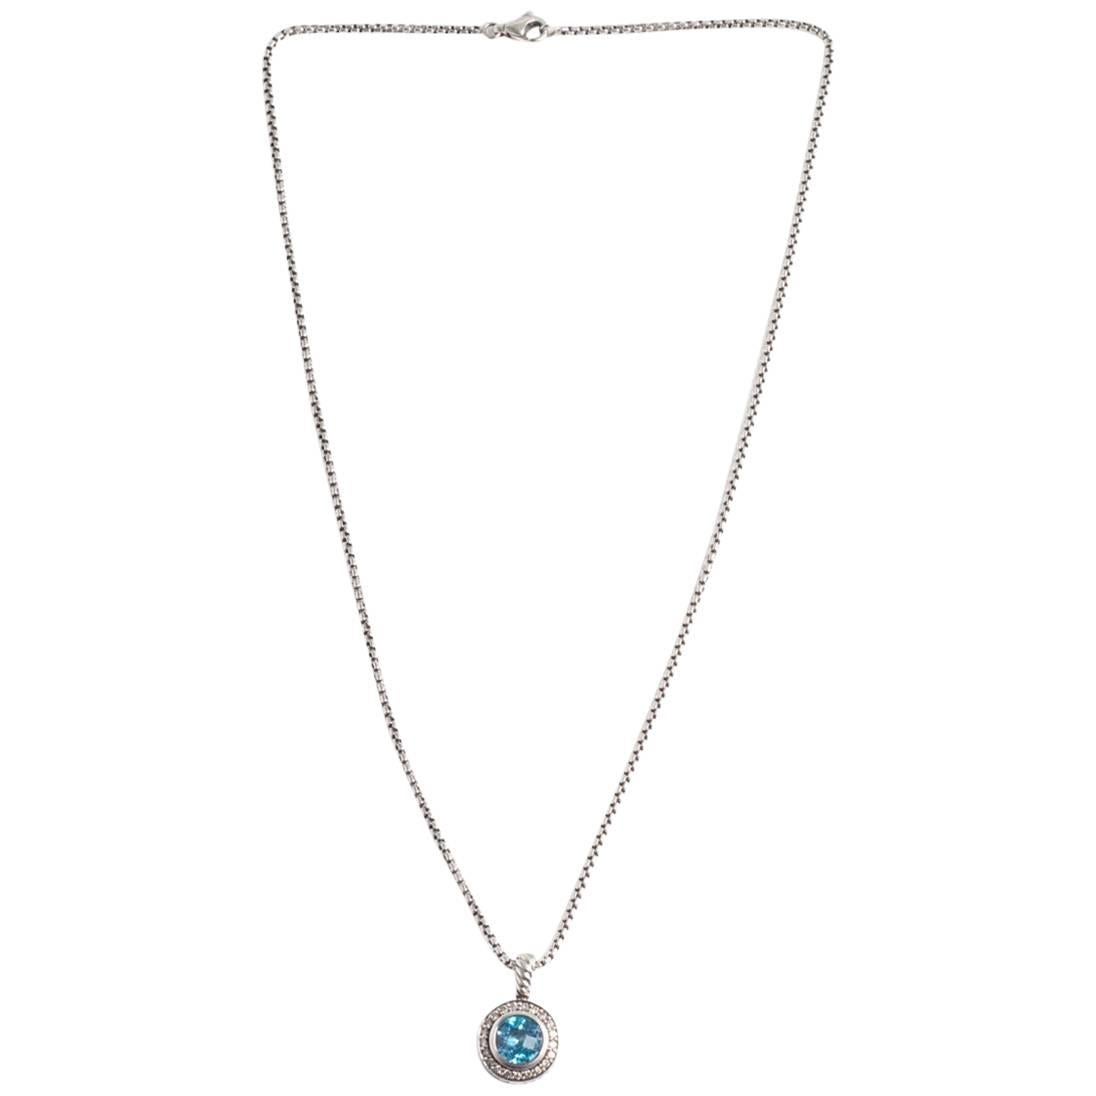 David Yurman Blue Topaz and Diamond Petite Cerise Necklace in Sterling Silver